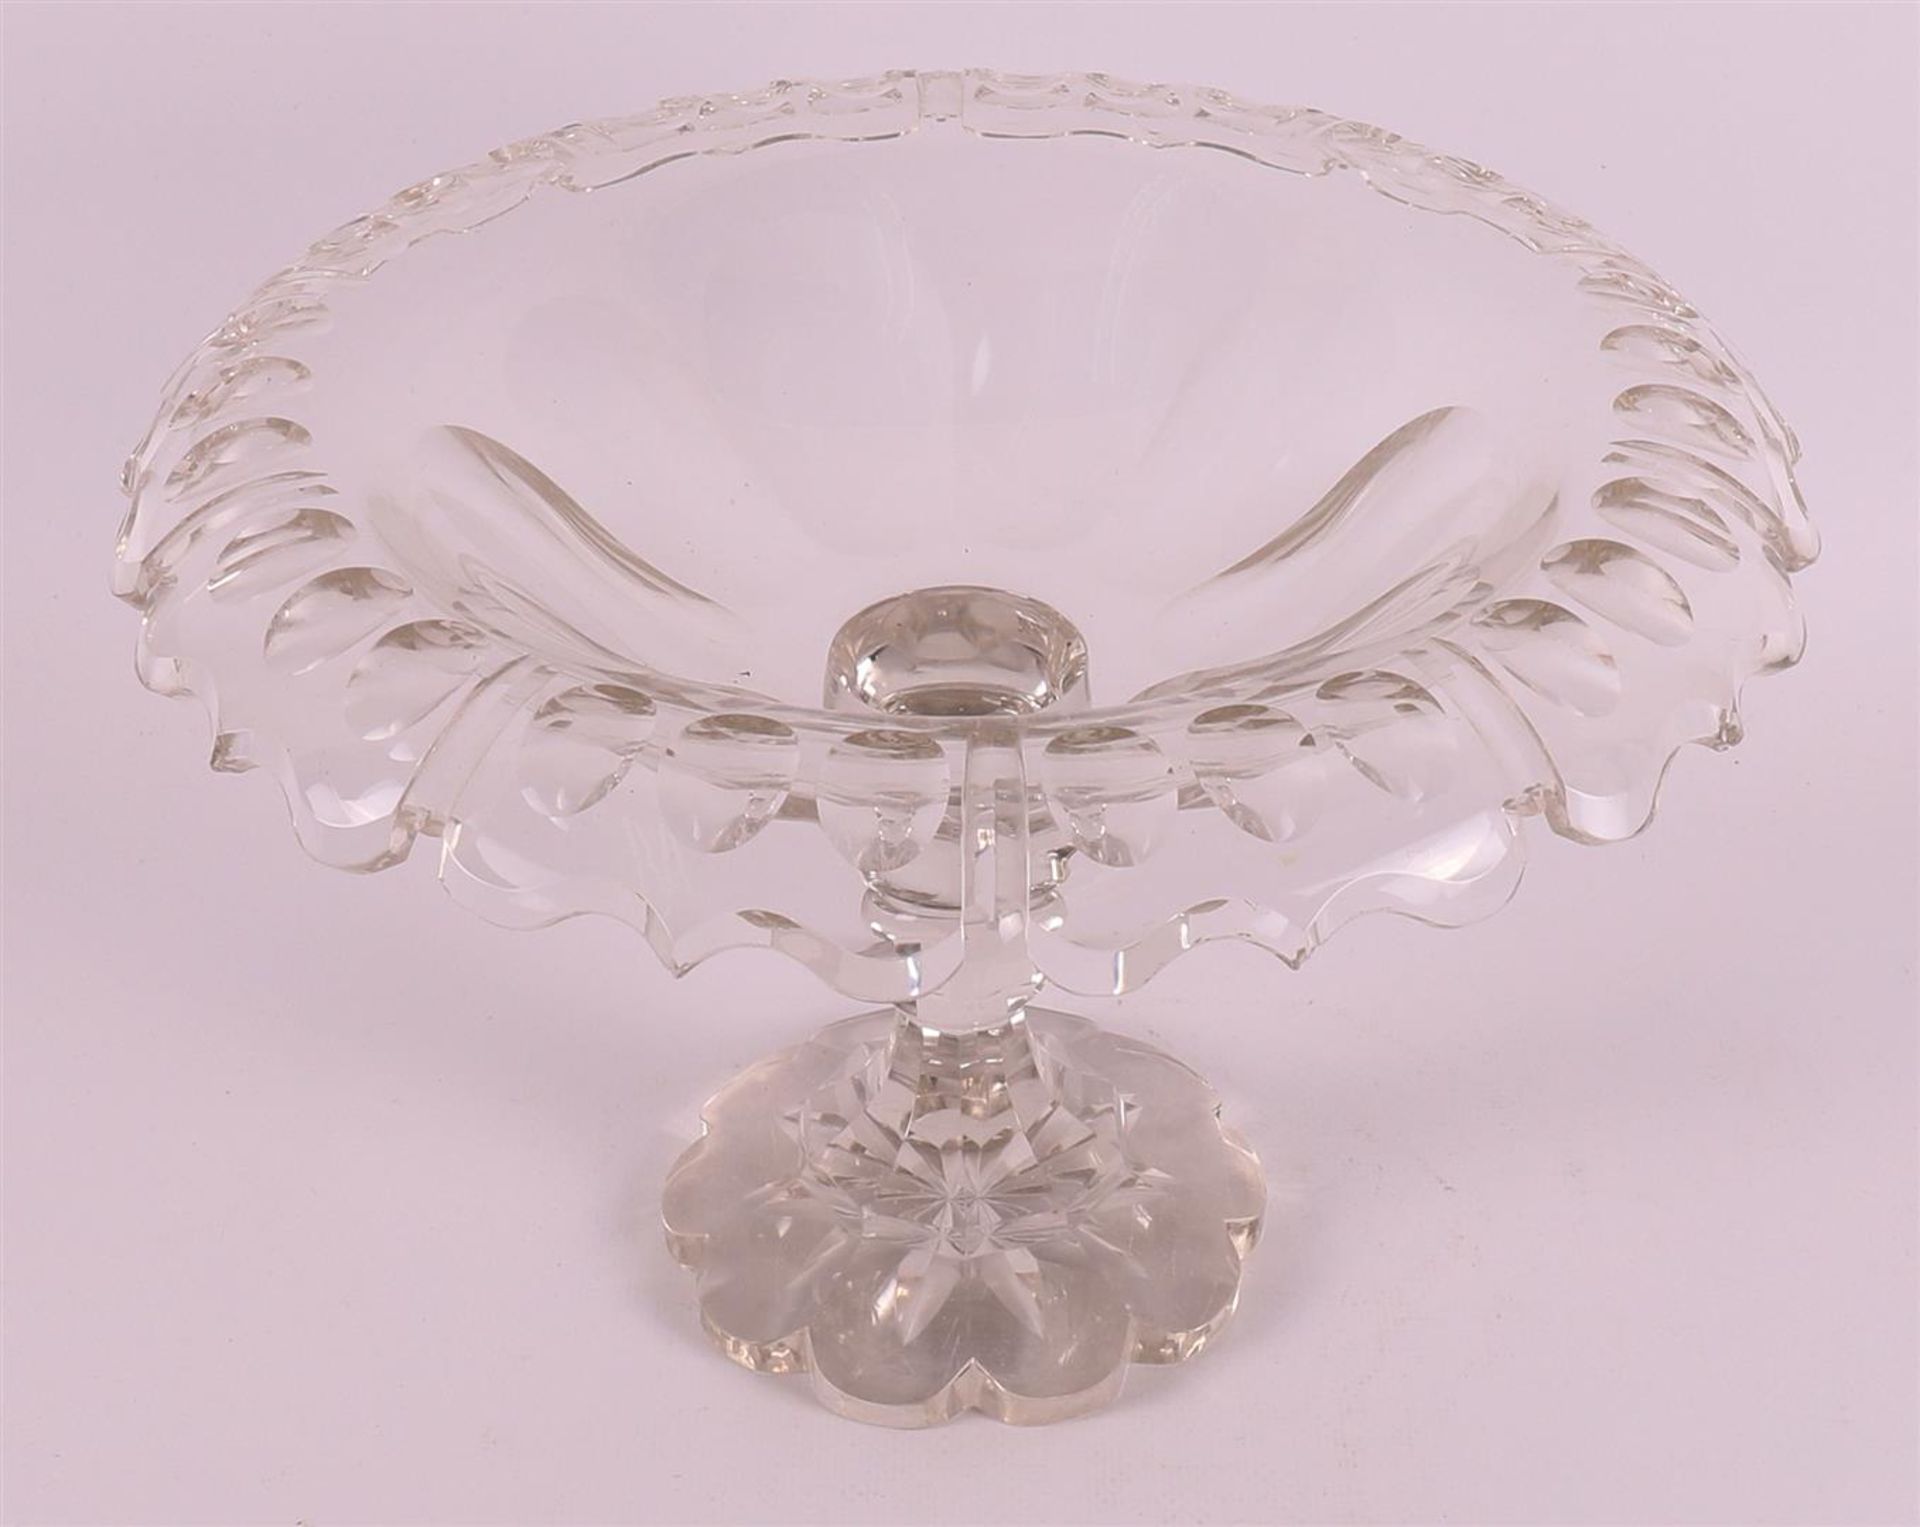 A clear crystal bowl with folded edge, ca. 1880.